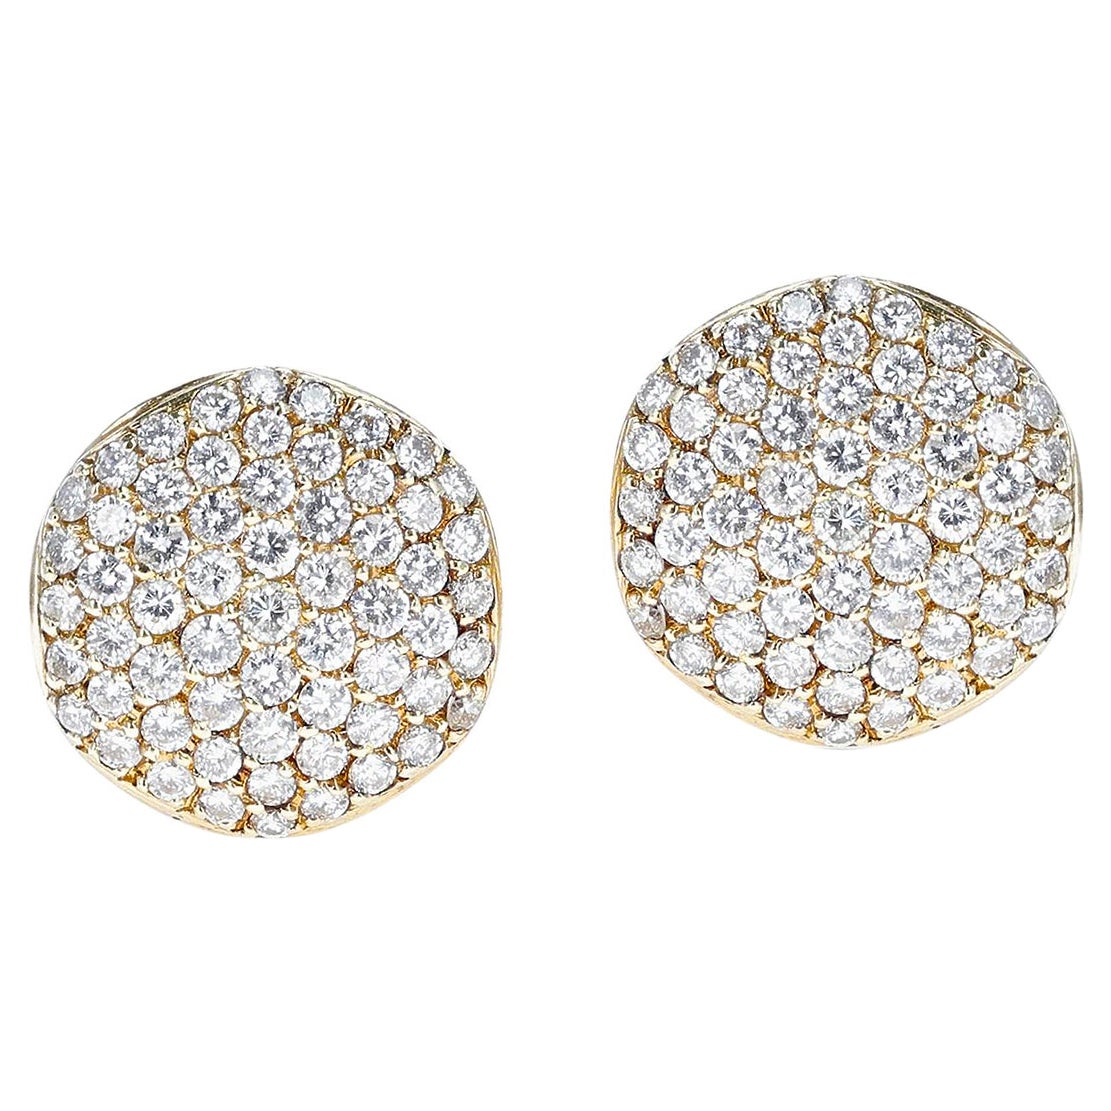 Important Edwardian 6.50 Carat Diamond Rare Cluster Earrings For Sale ...